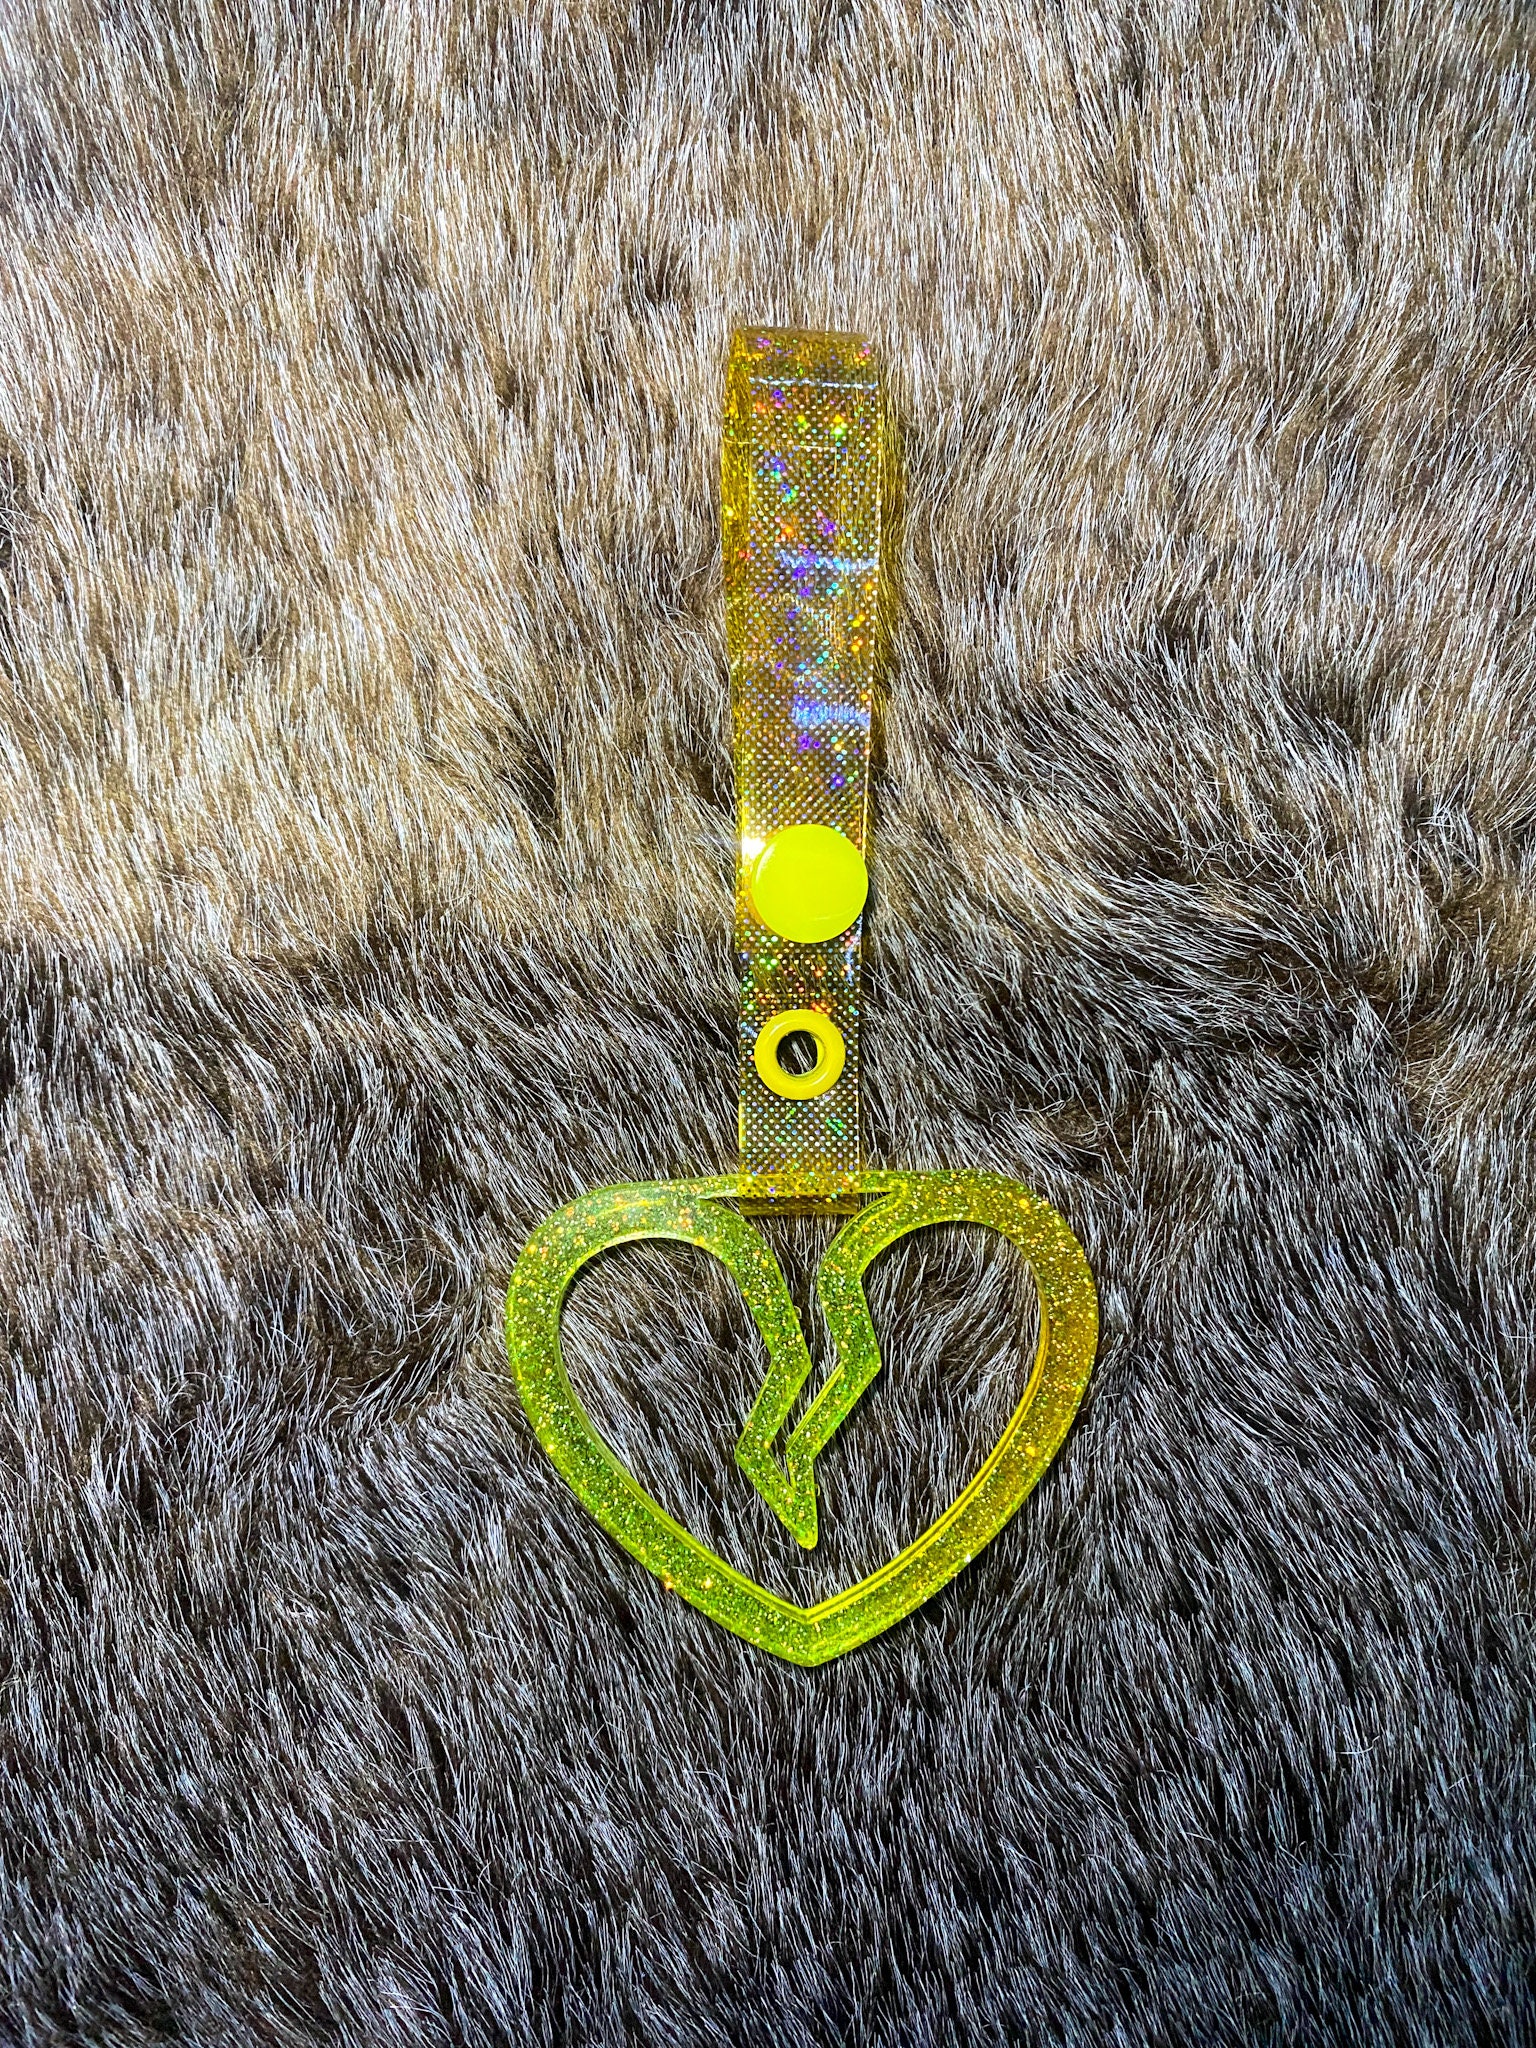 Heart Shaped JDM Keychain Carabiner